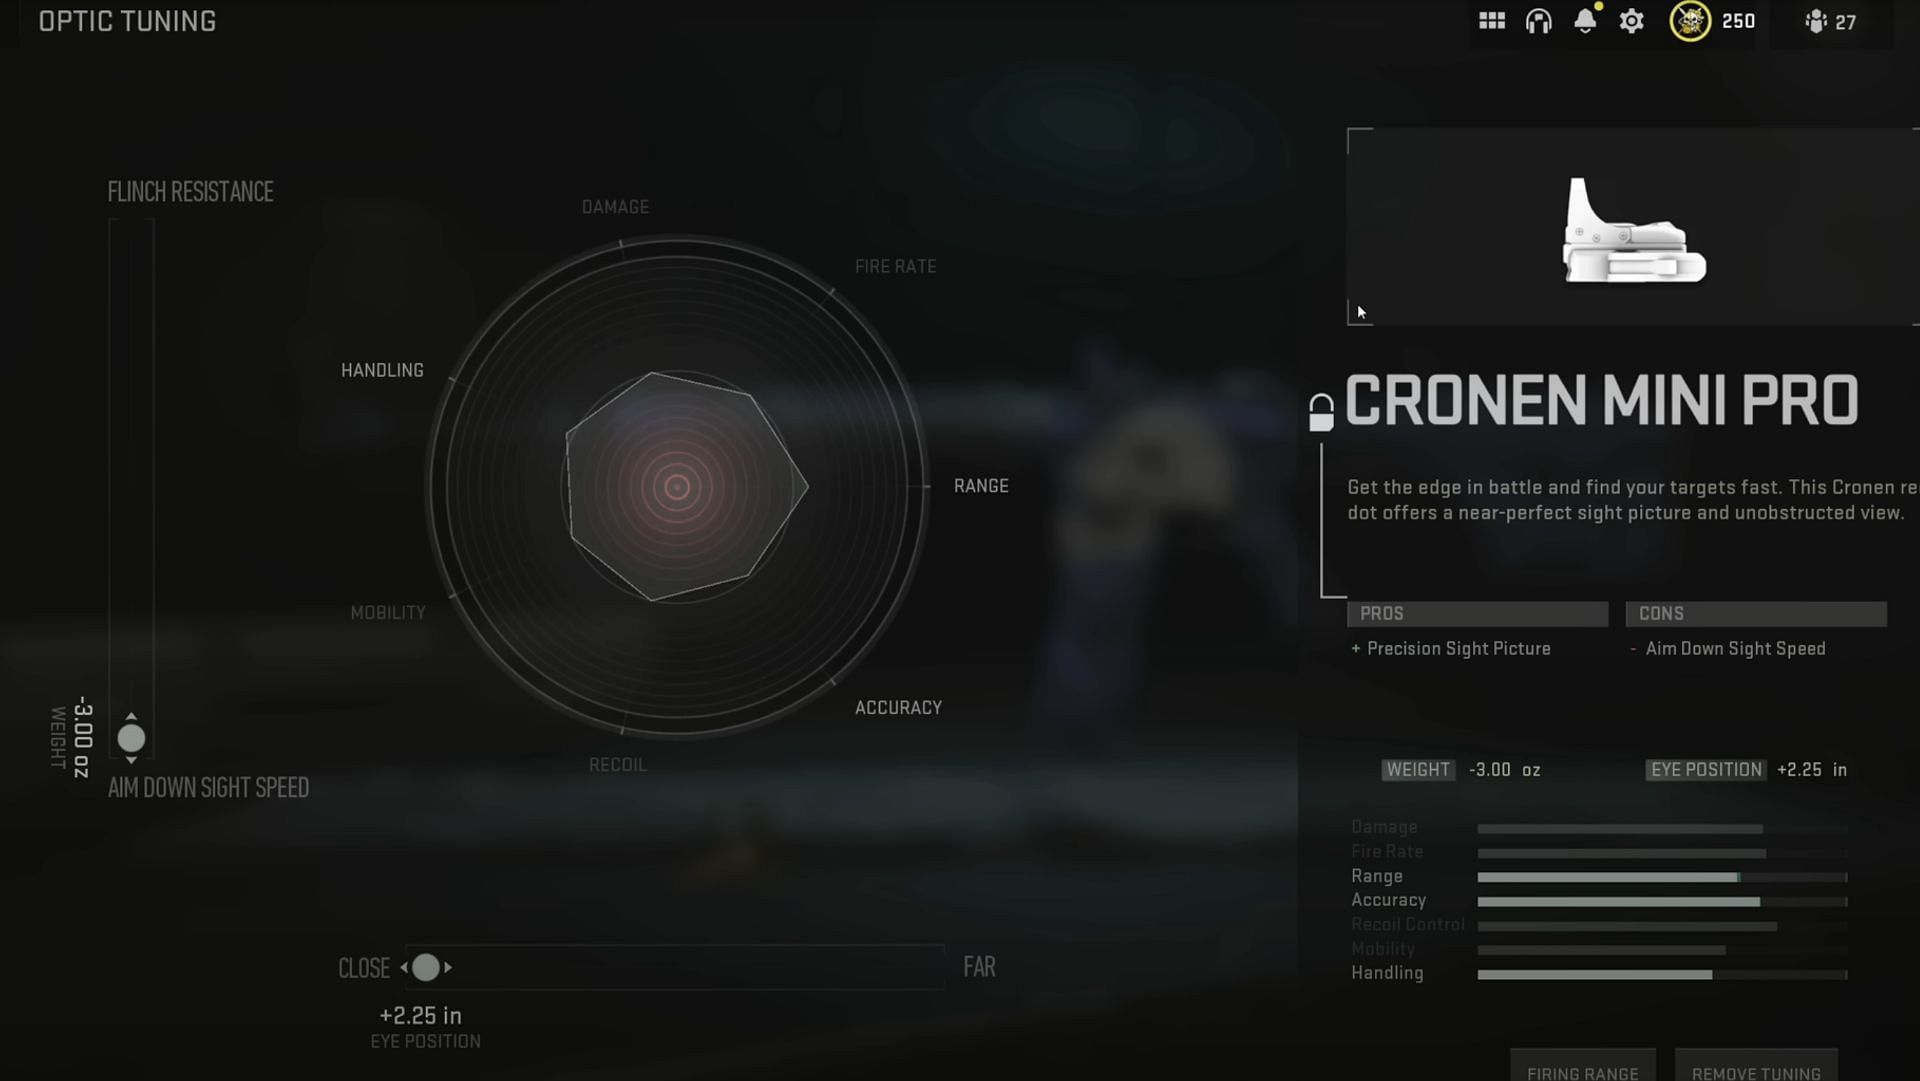 Cronen Mini Pro optic tuning (Image via Activision and YouTube/Metaphor)